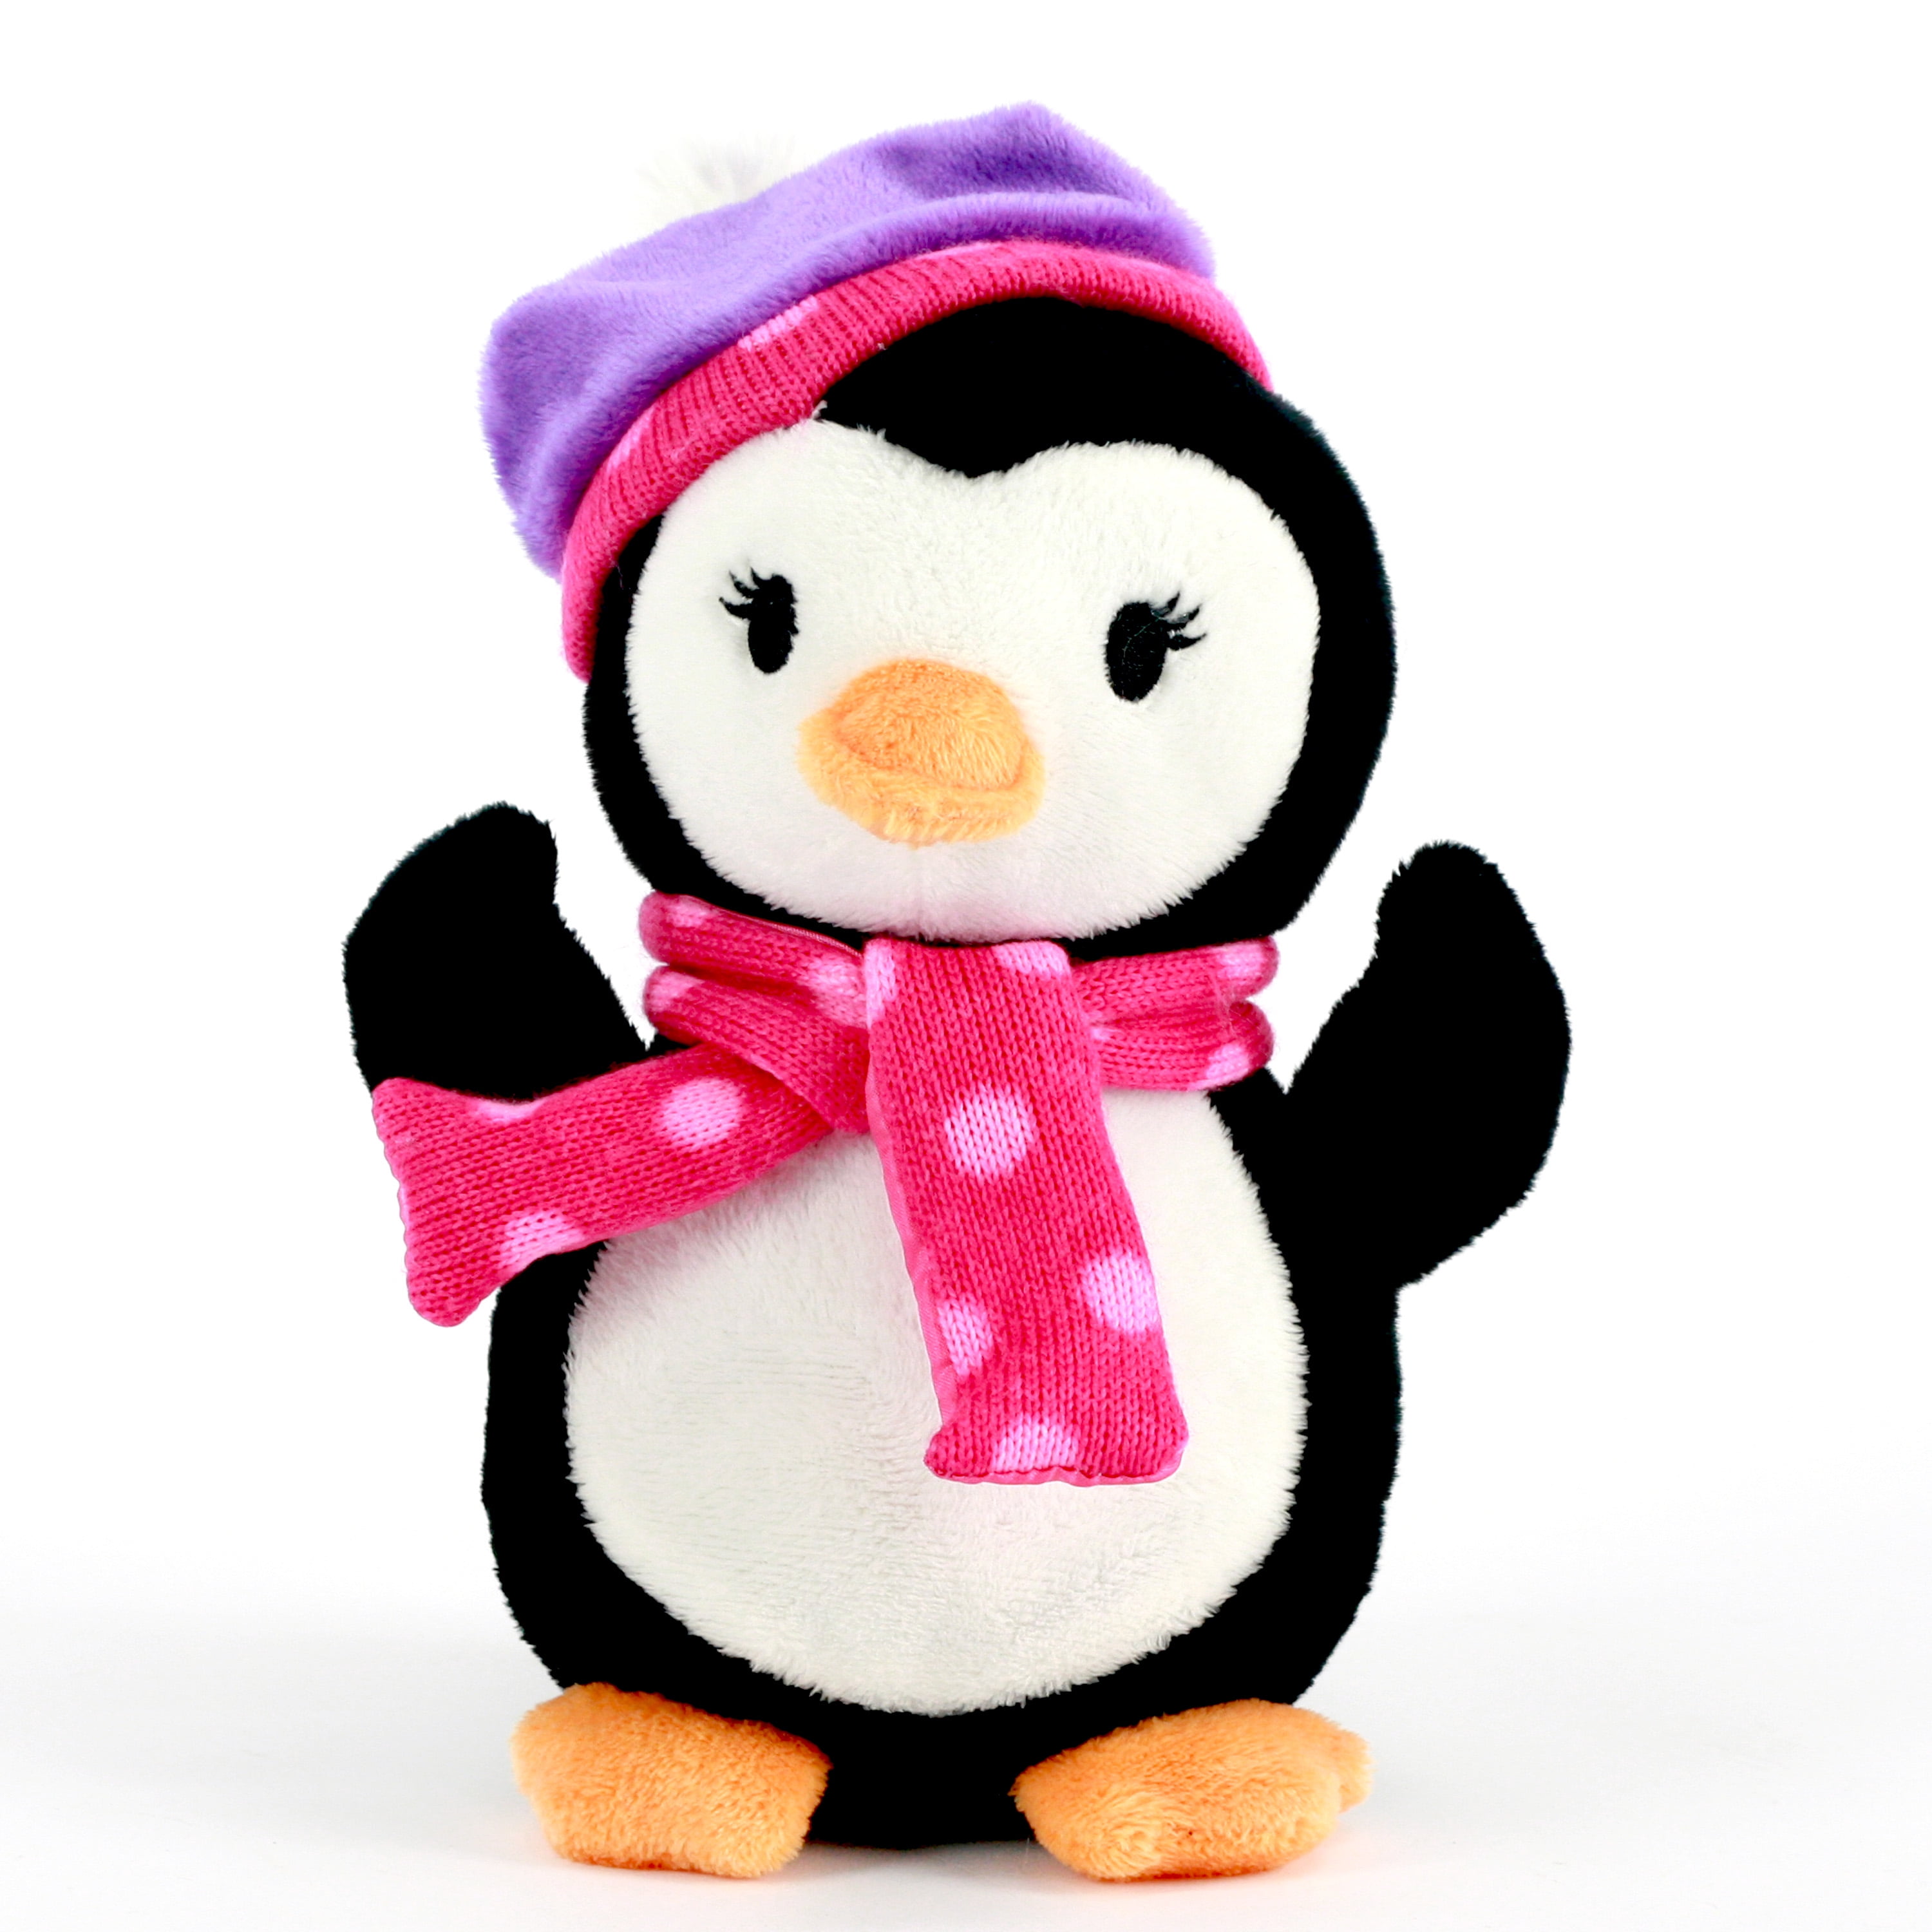 stuffed christmas penguin